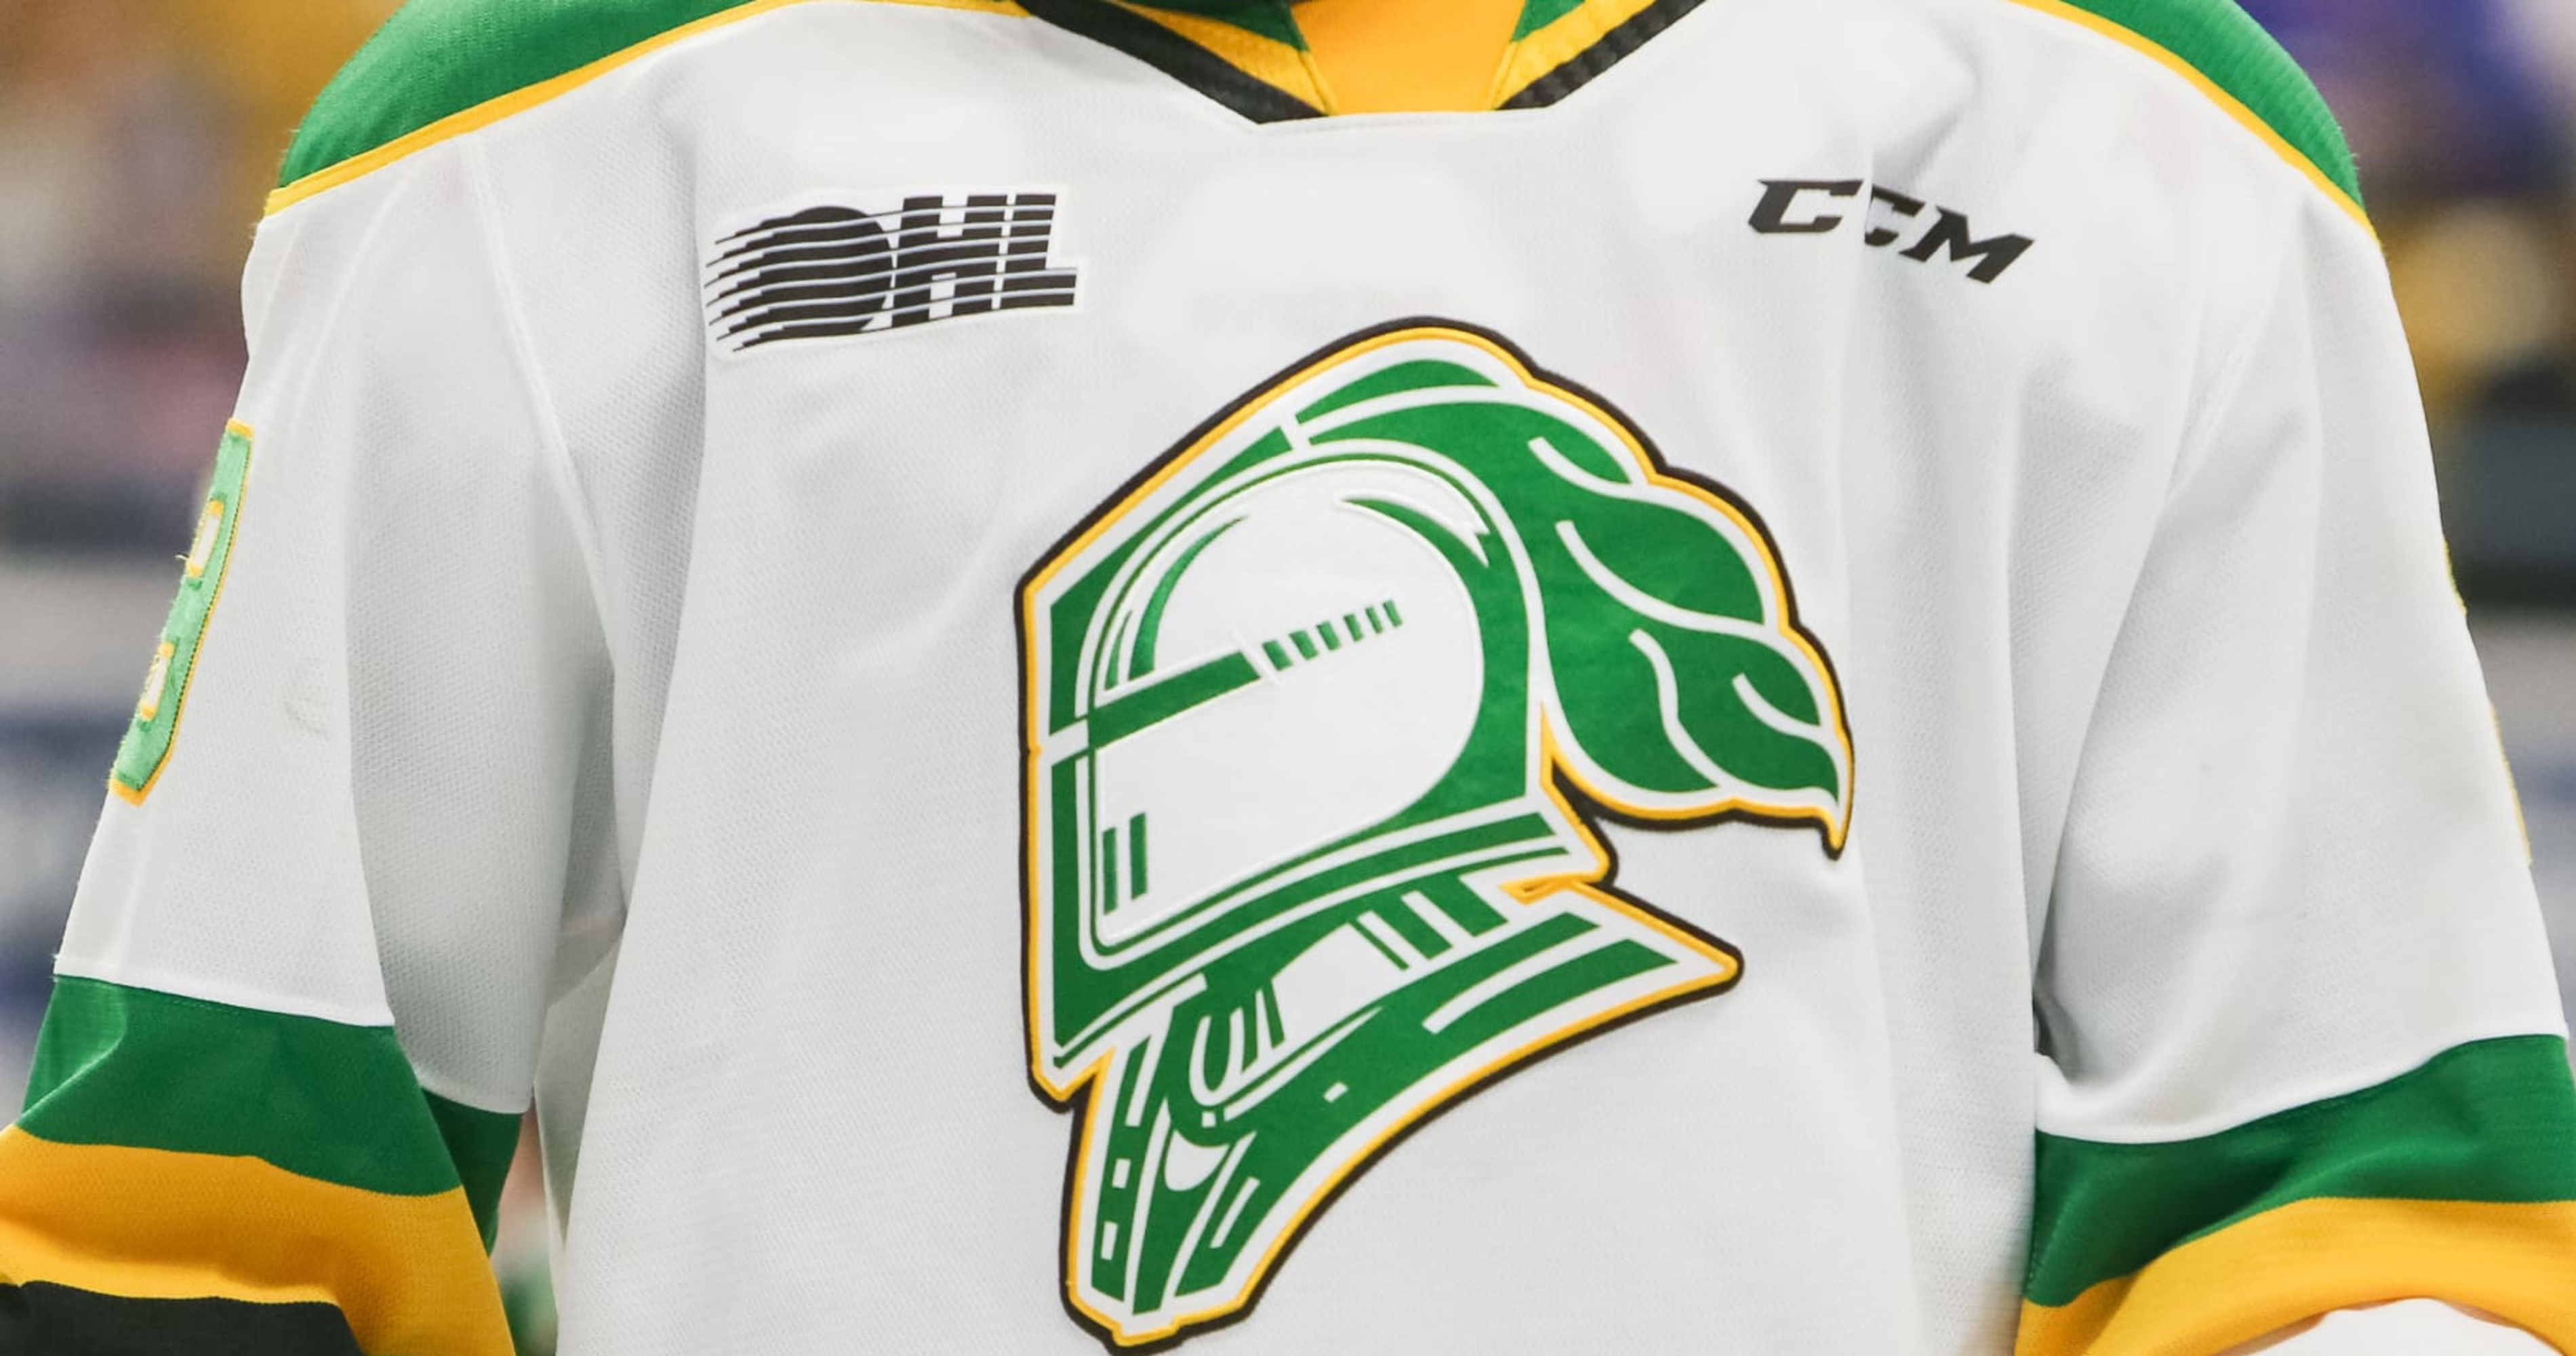 London Knights Home Uniform - Ontario Hockey League (OHL) - Chris